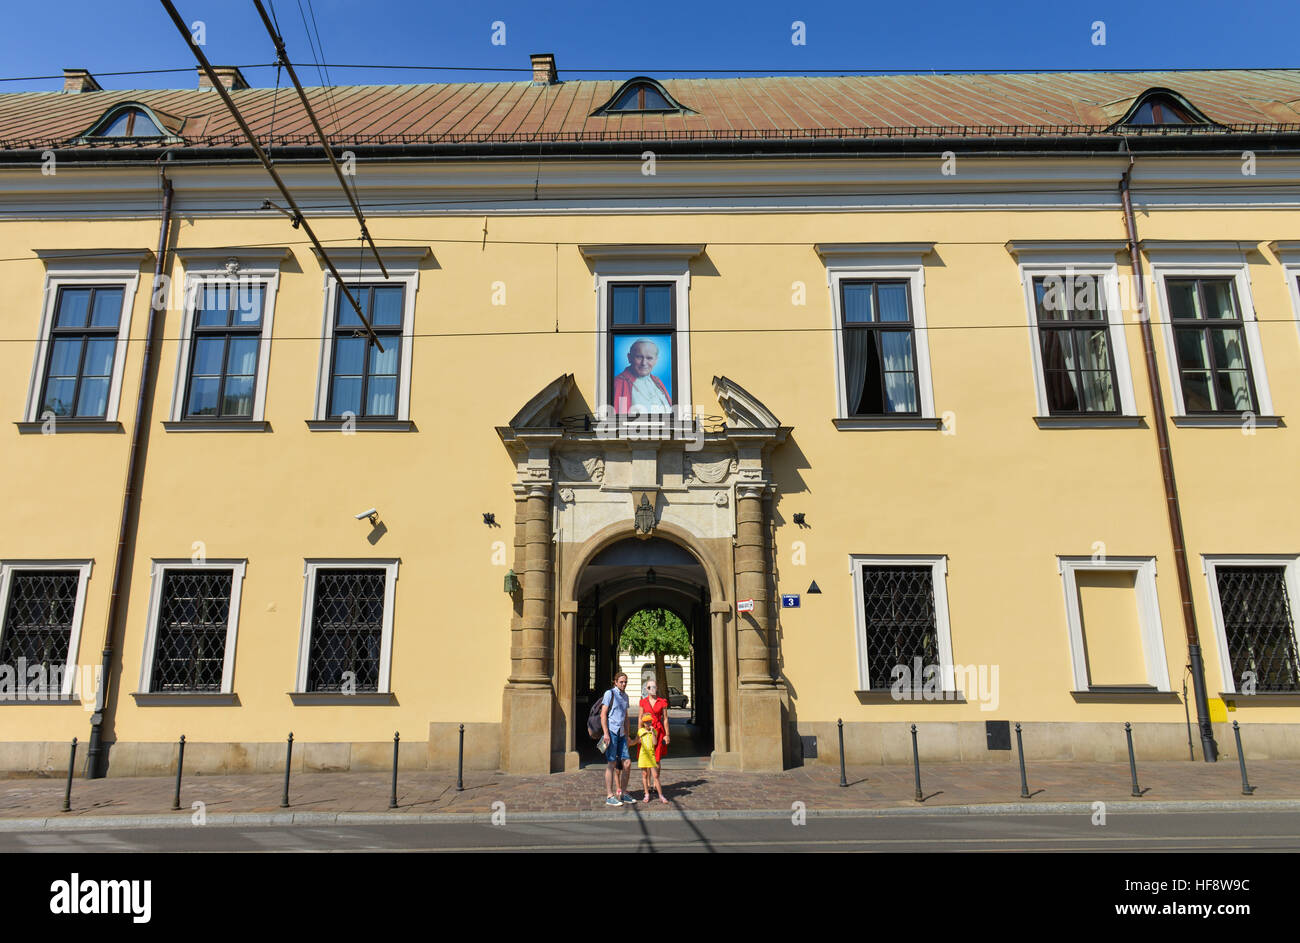 Bischofspalast, Franciszkanska, Krakau, Polen, Bishop's palace, Cracow, Poland Stock Photo